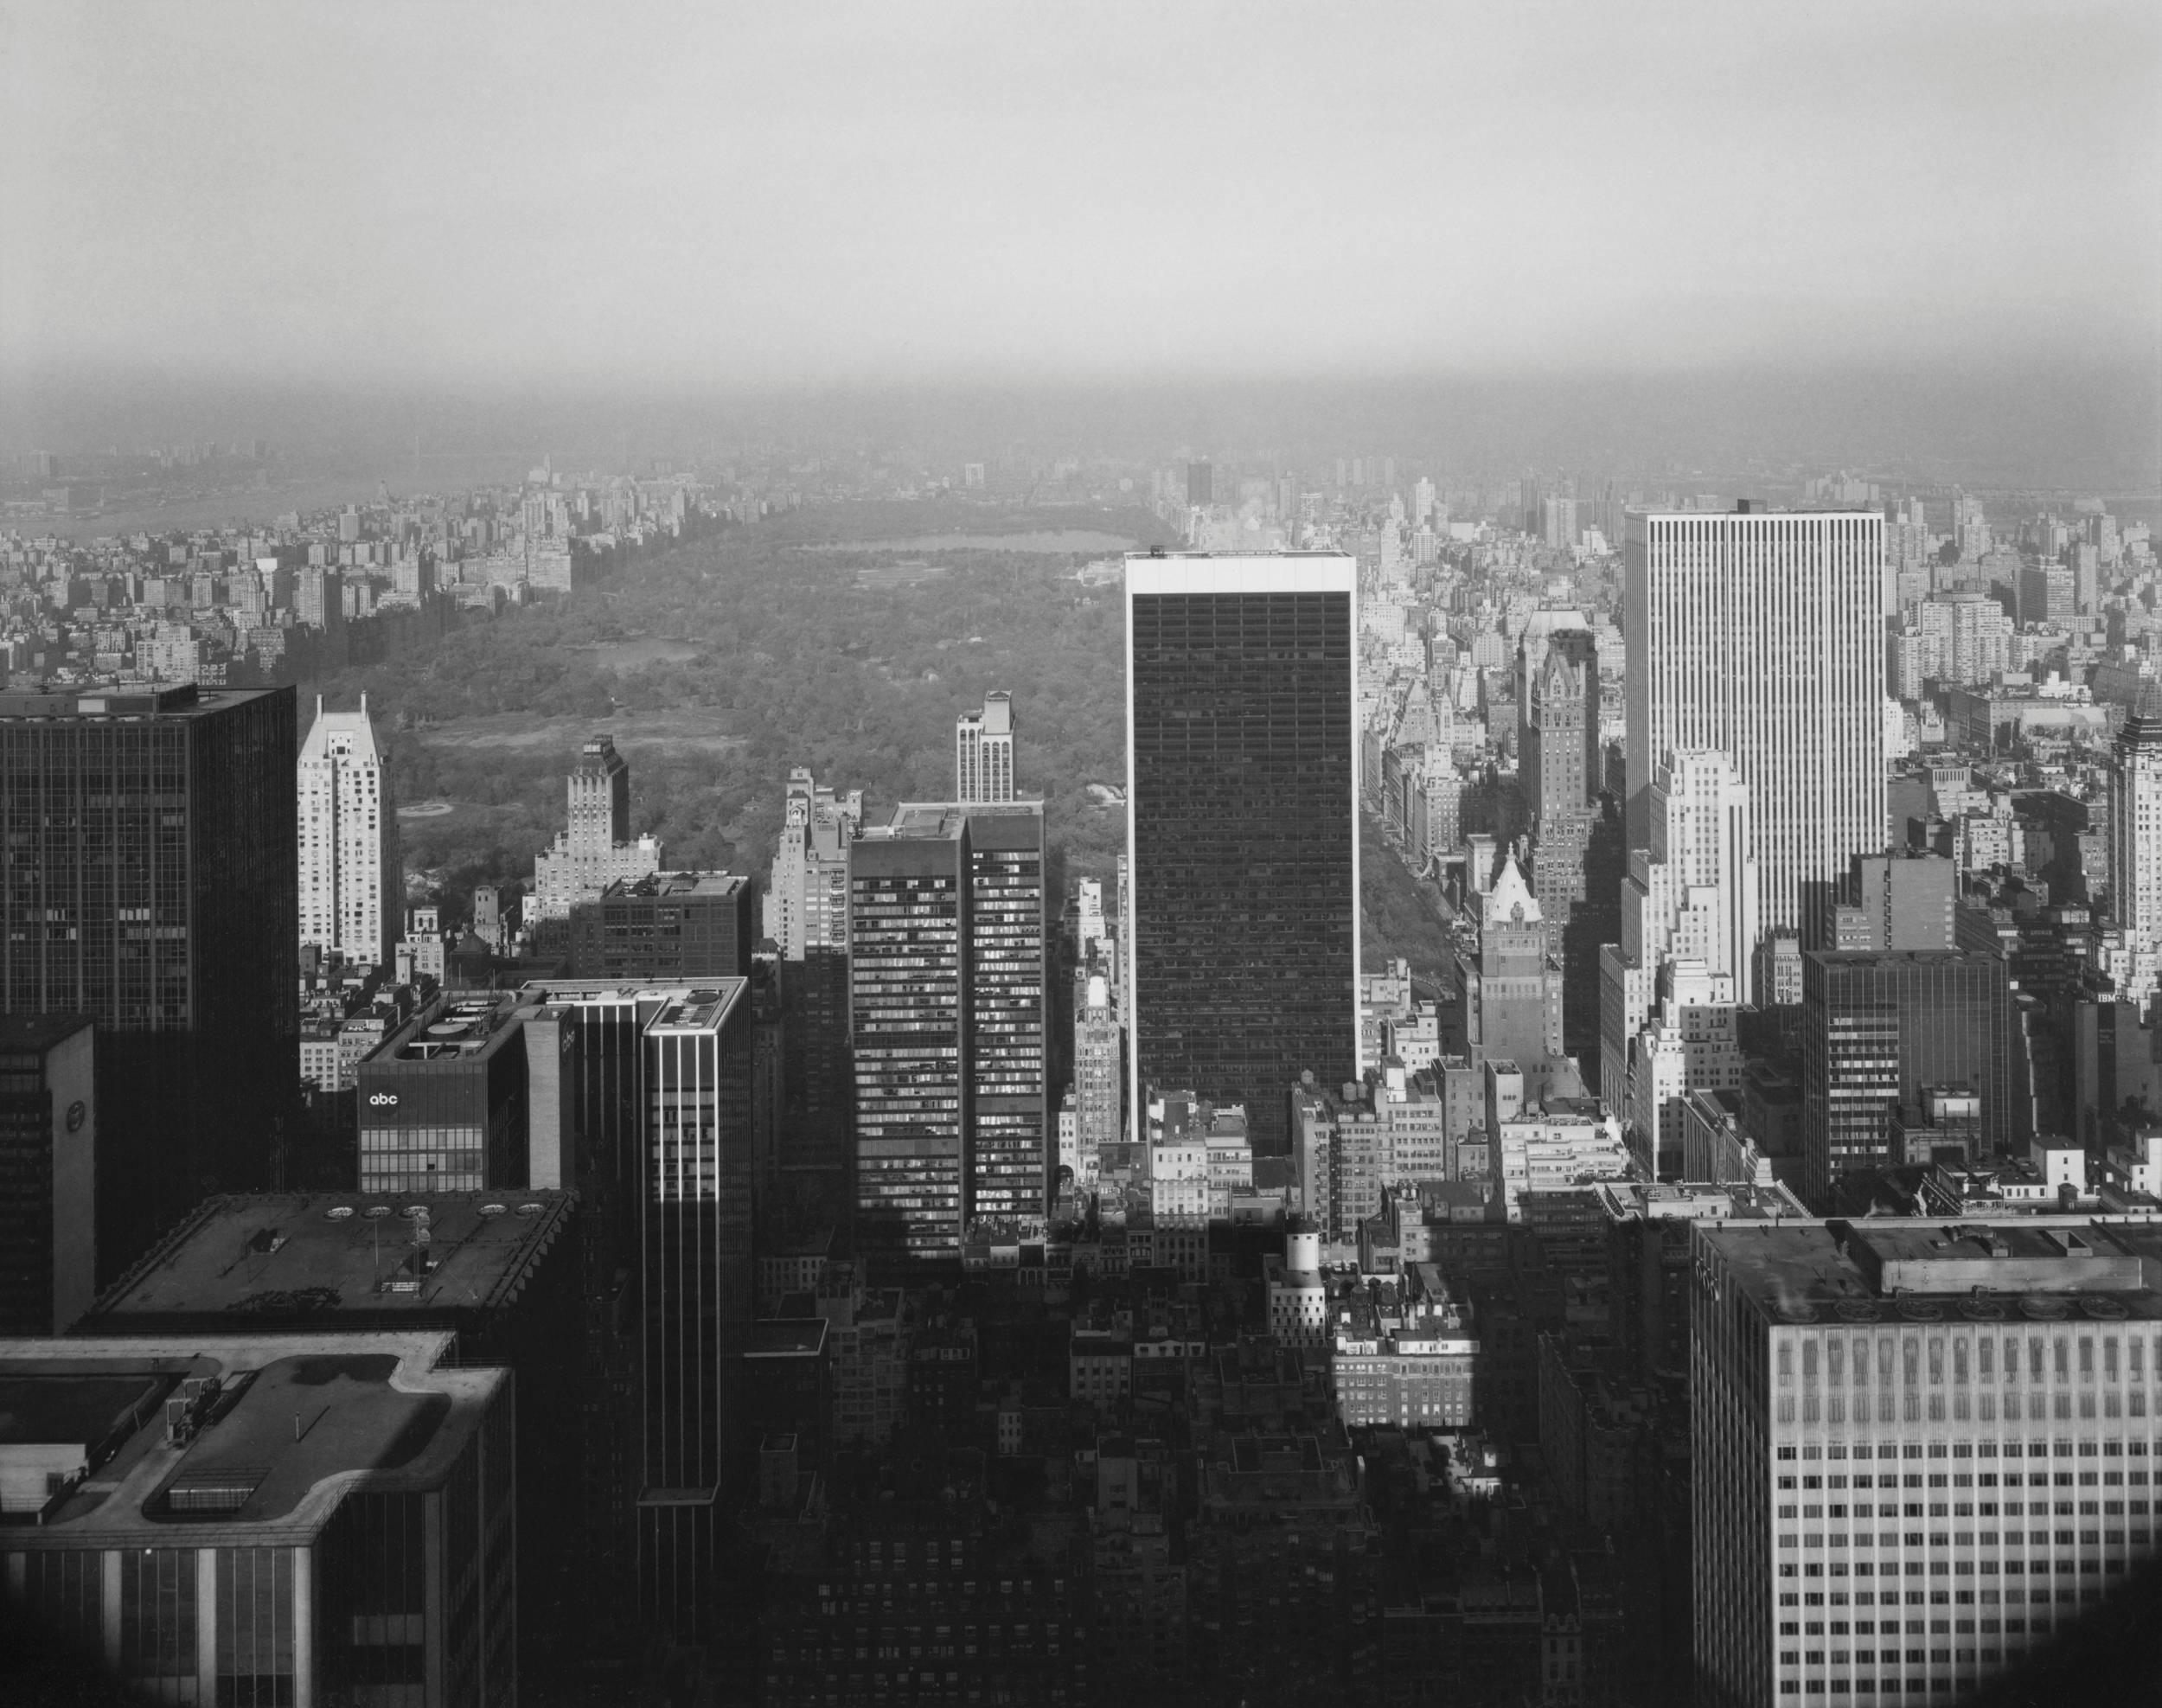 Nicholas Nixon Landscape Photograph - North View from 48th Street, New York City